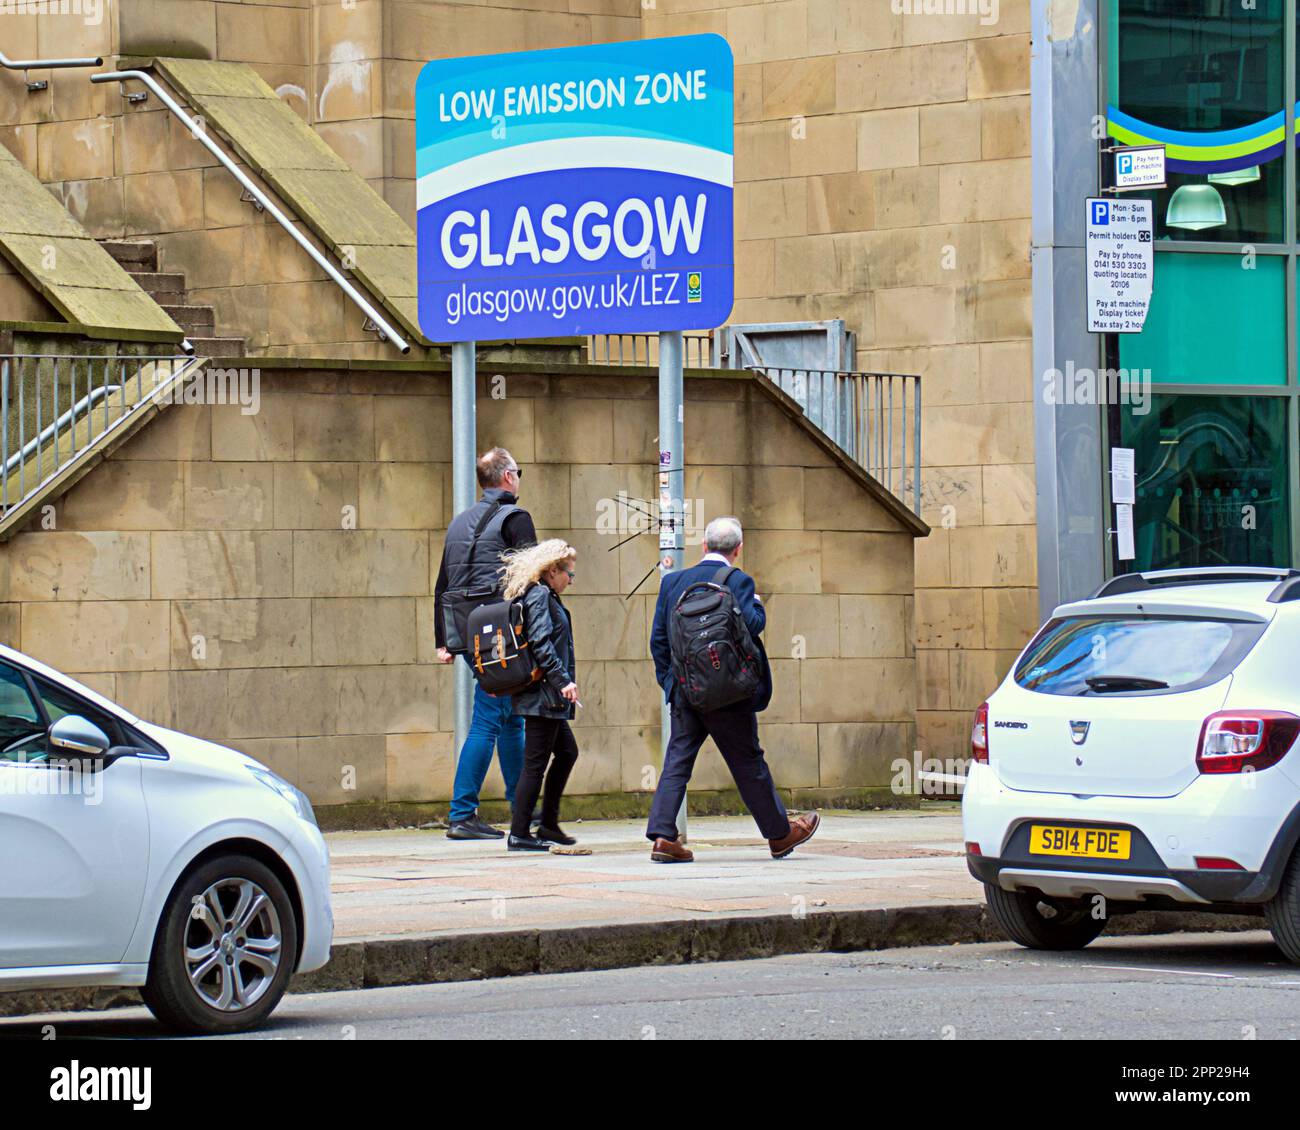 low emission zone sign Glasgow, Scotland, UK. Stock Photo